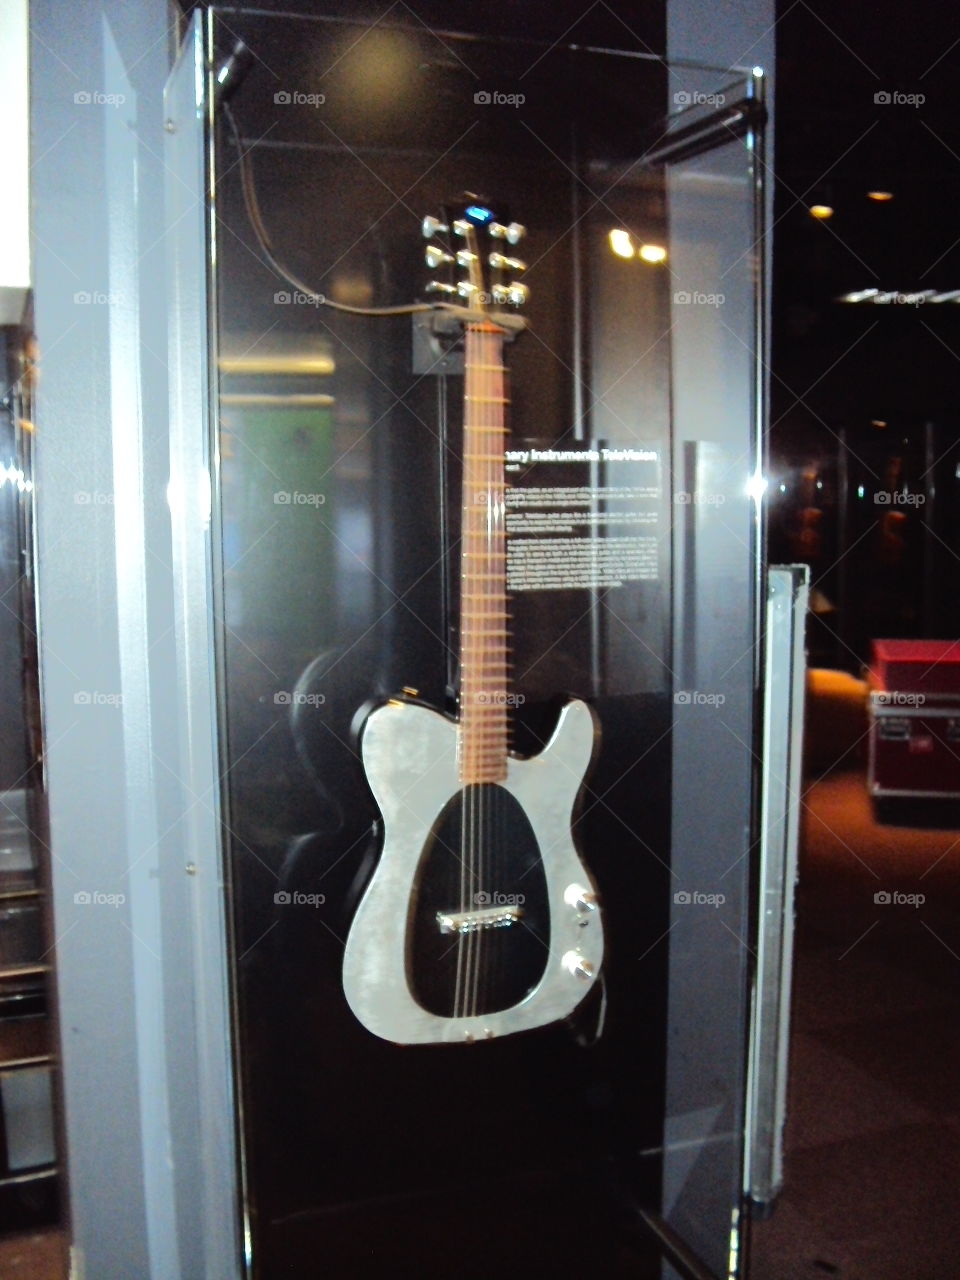 guitar exhibit